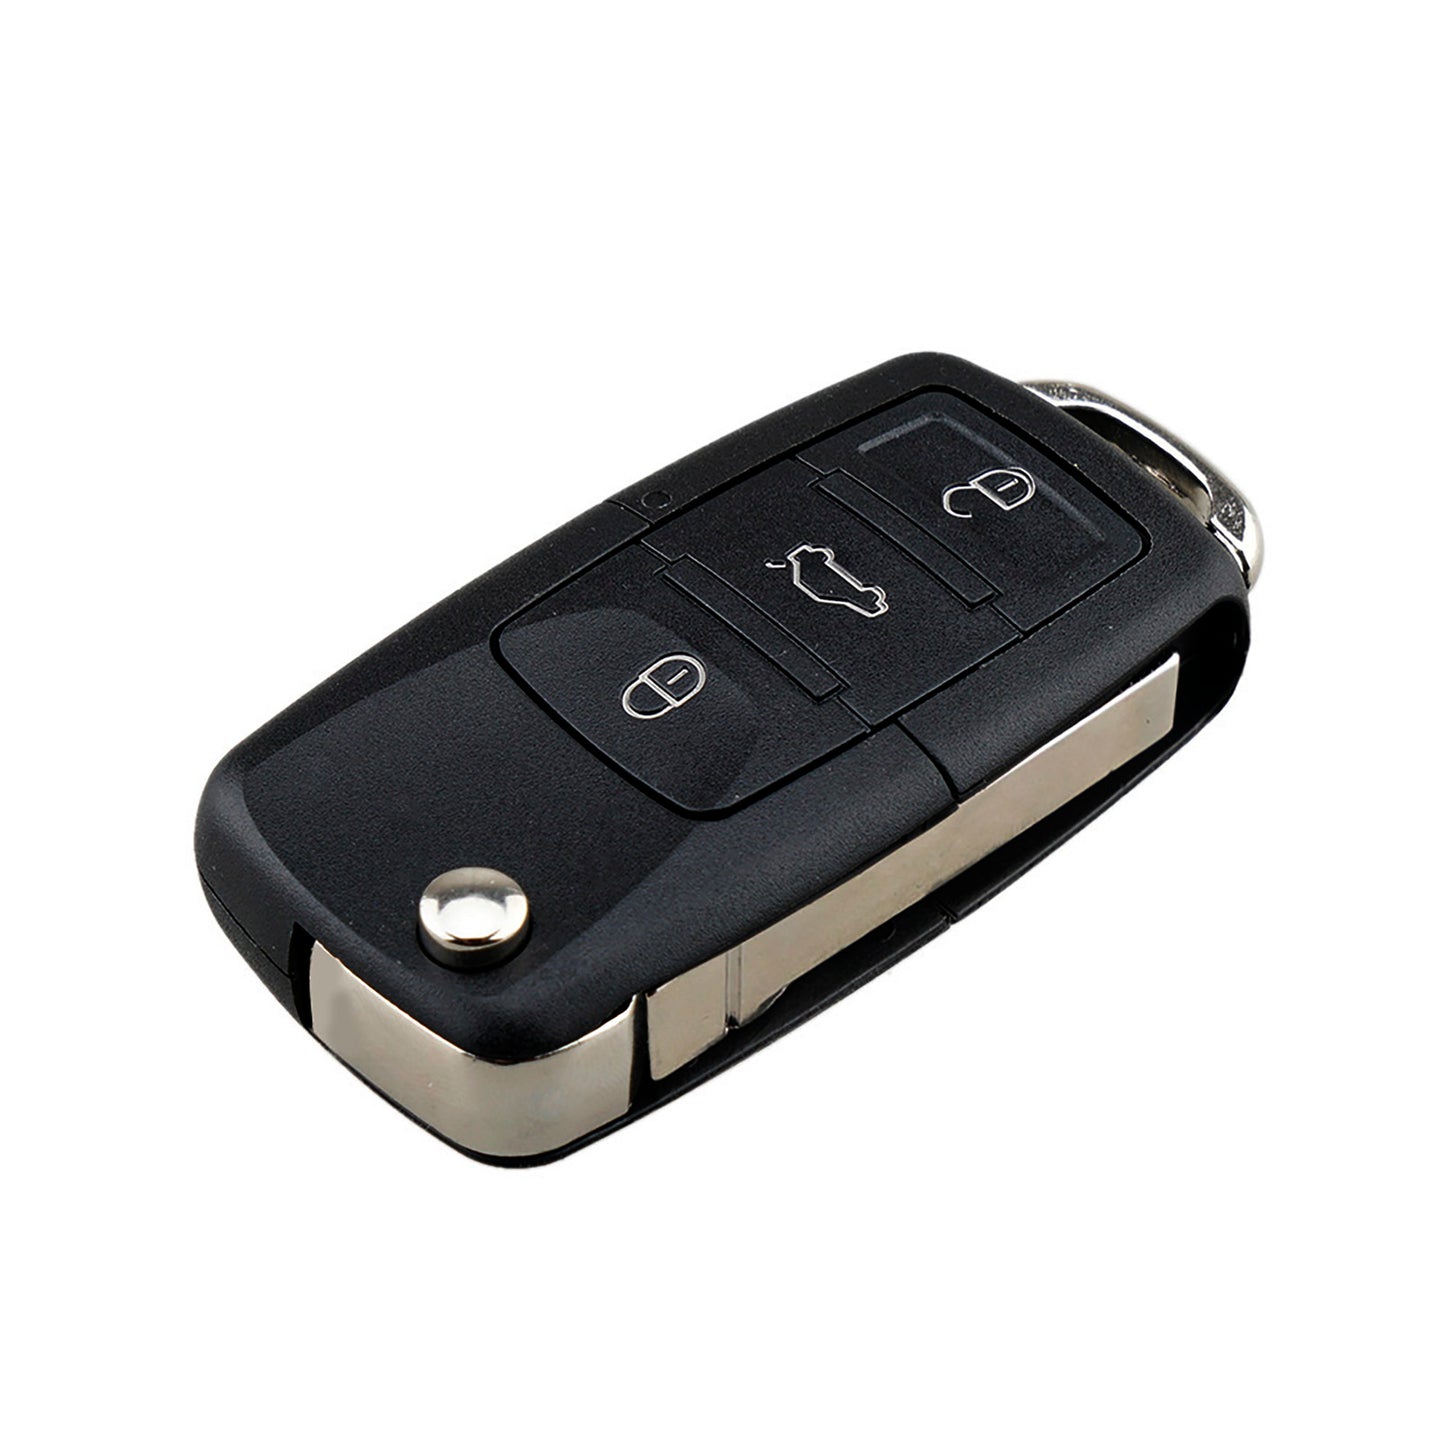 4 Buttons 315MHz Keyless Entry Fob Remote Car Key For 1998-2002 VW Passat Jetta Golf Cabrio Beetle FCC ID: HLO1J0959753F 1J0959753T SKU : J855